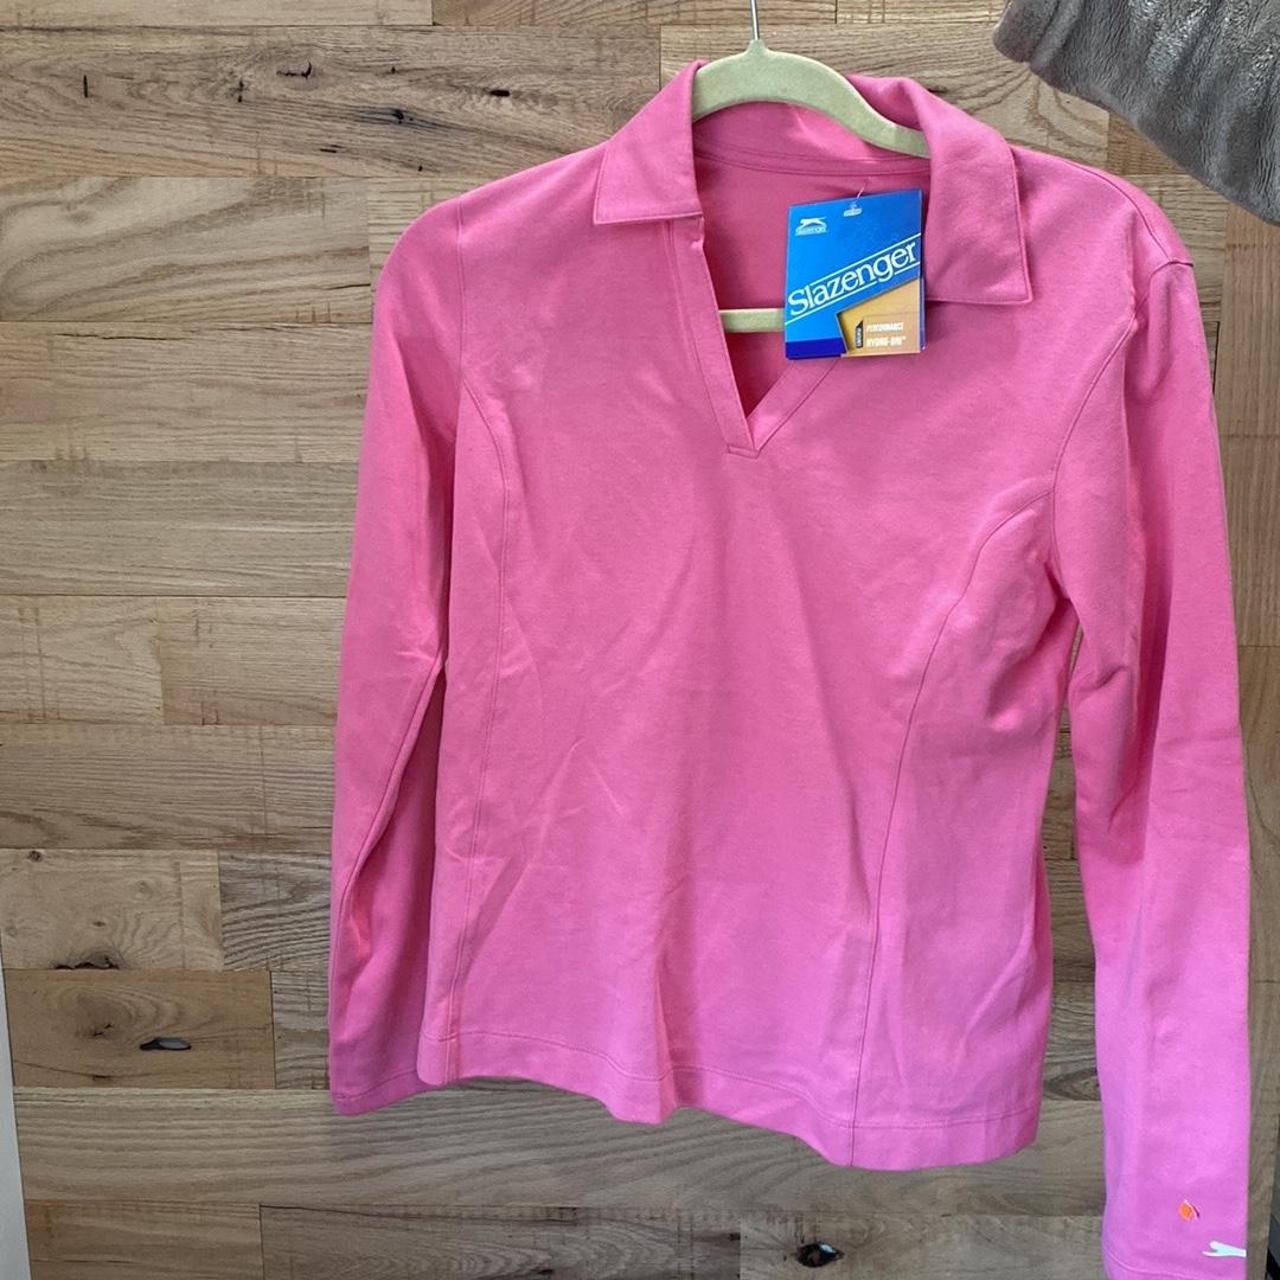 Slazenger Women's Pink Shirt